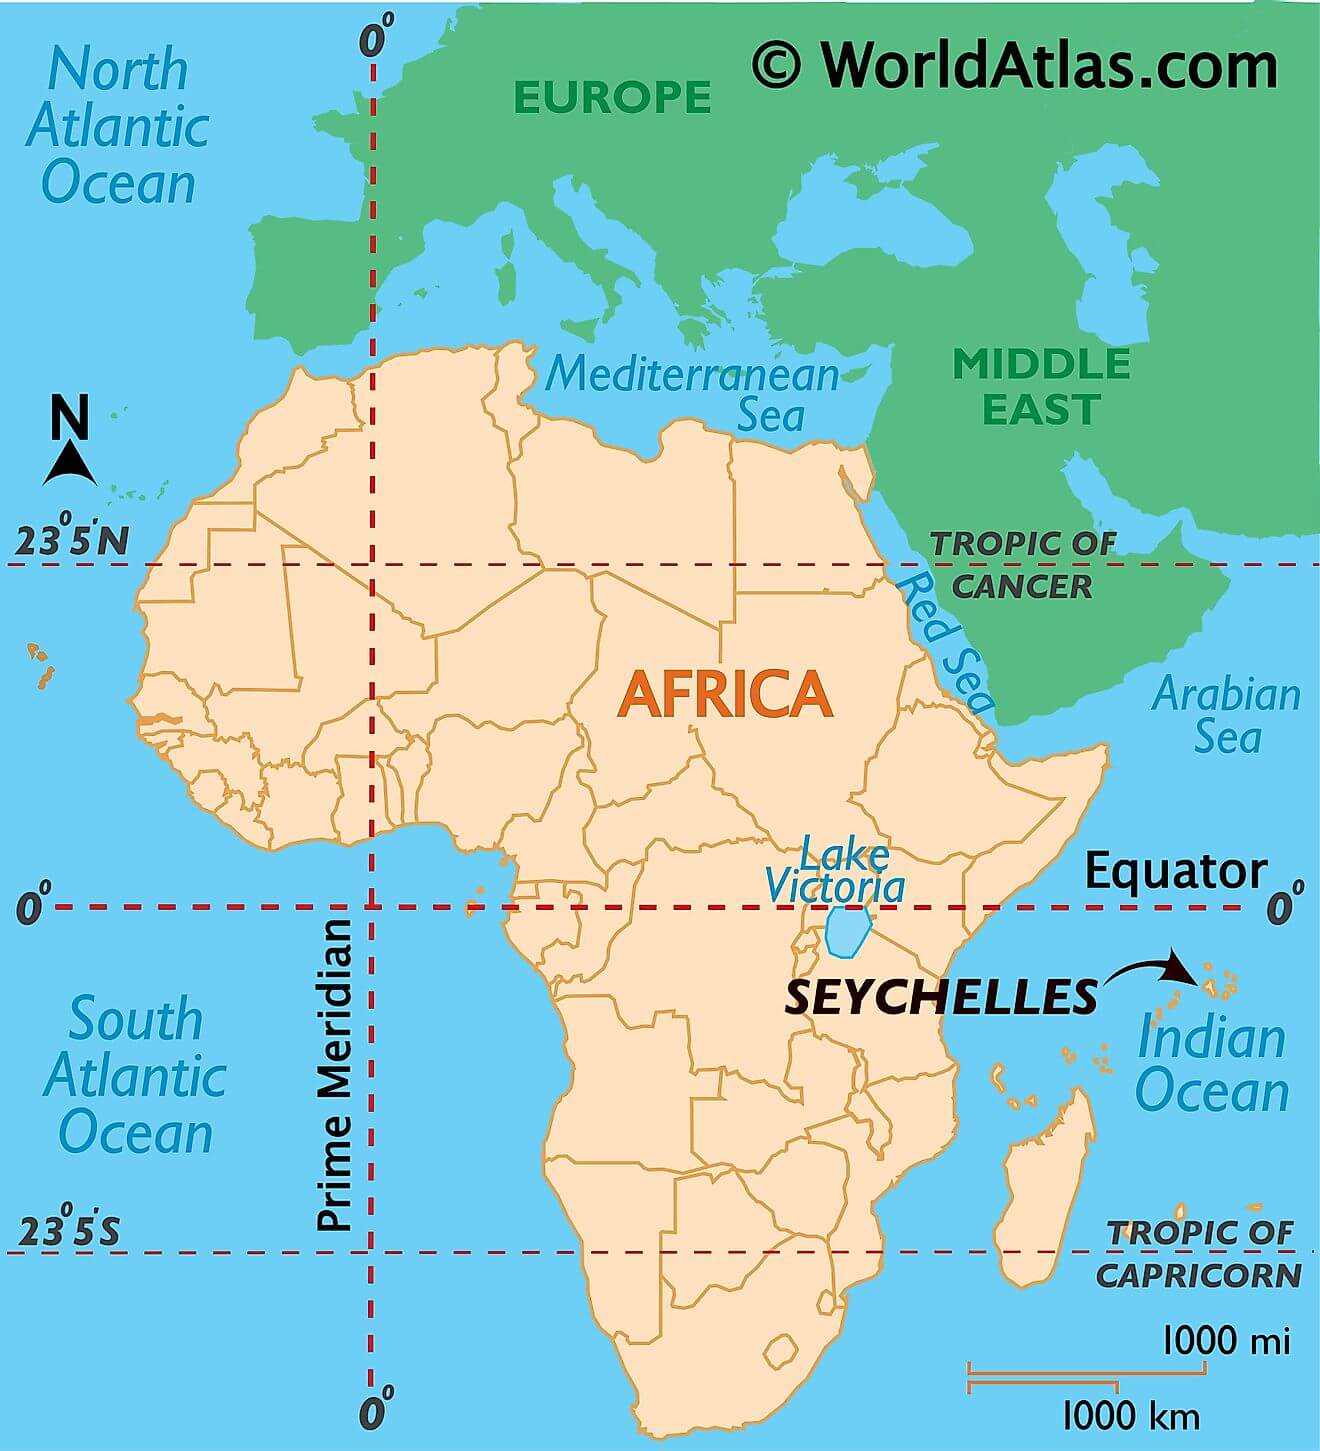 Where is Seychelles?